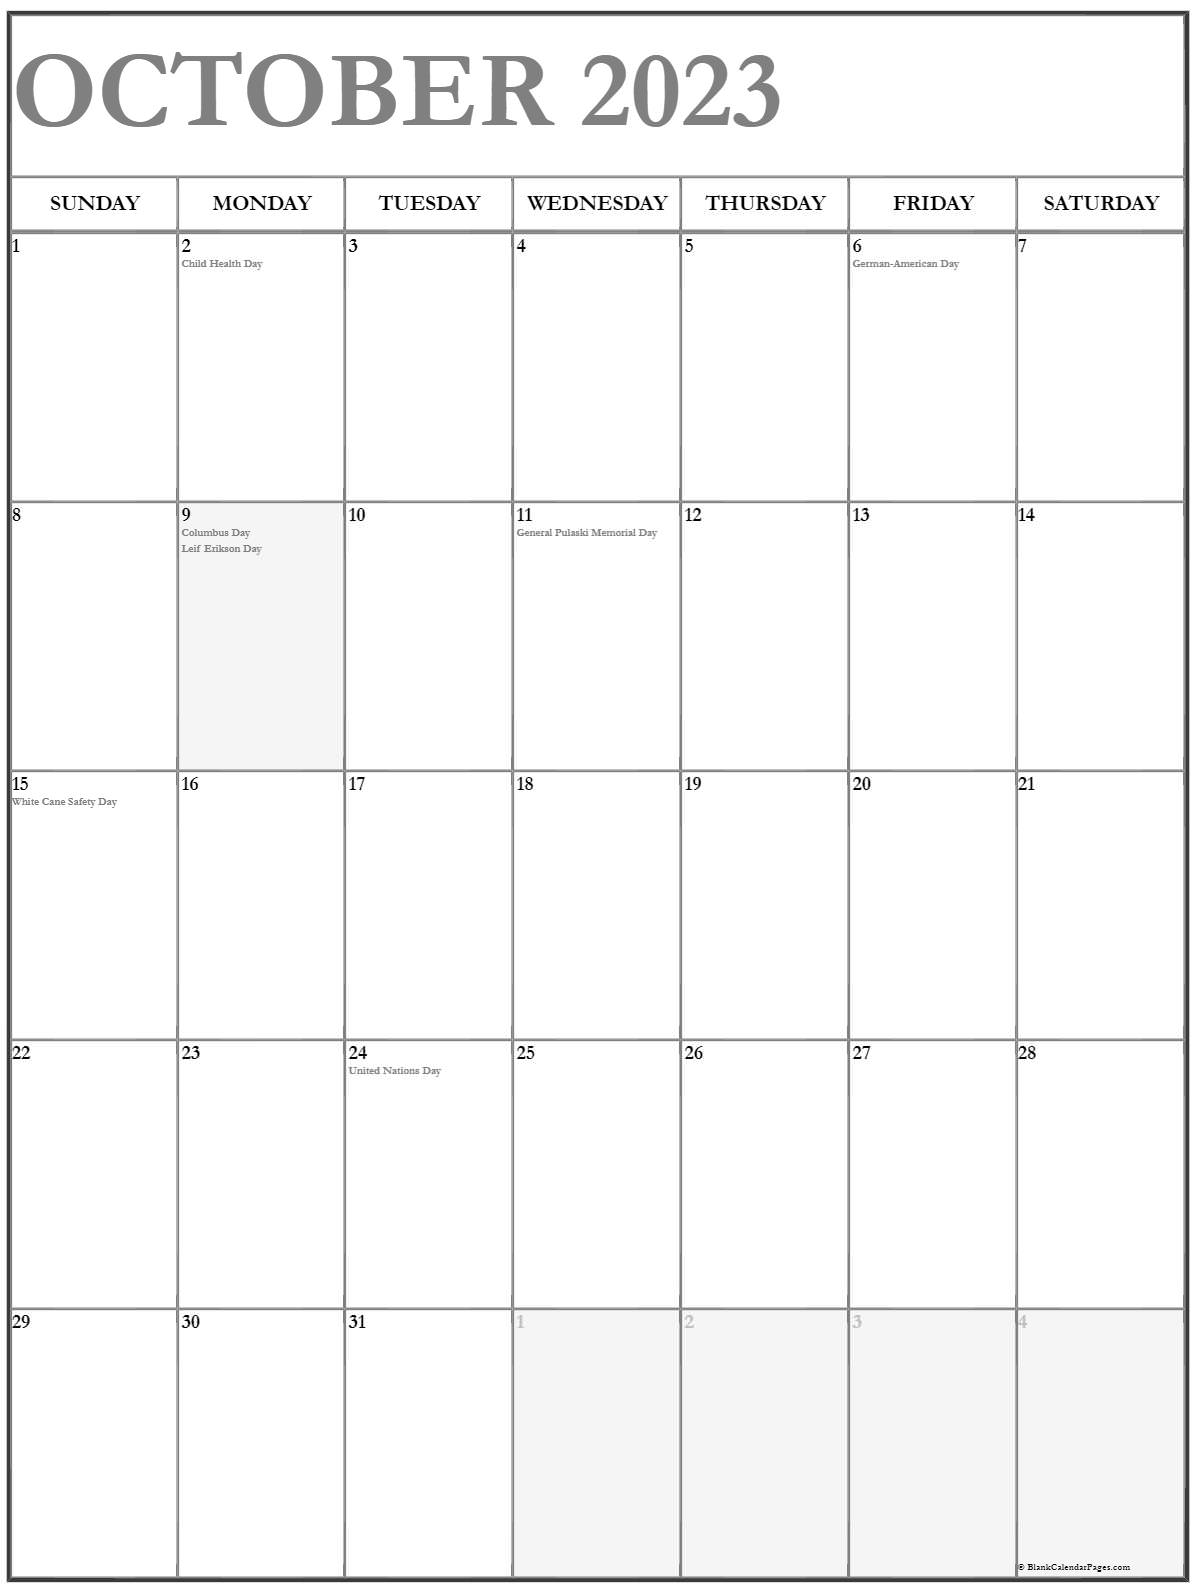 october calendar for binfer